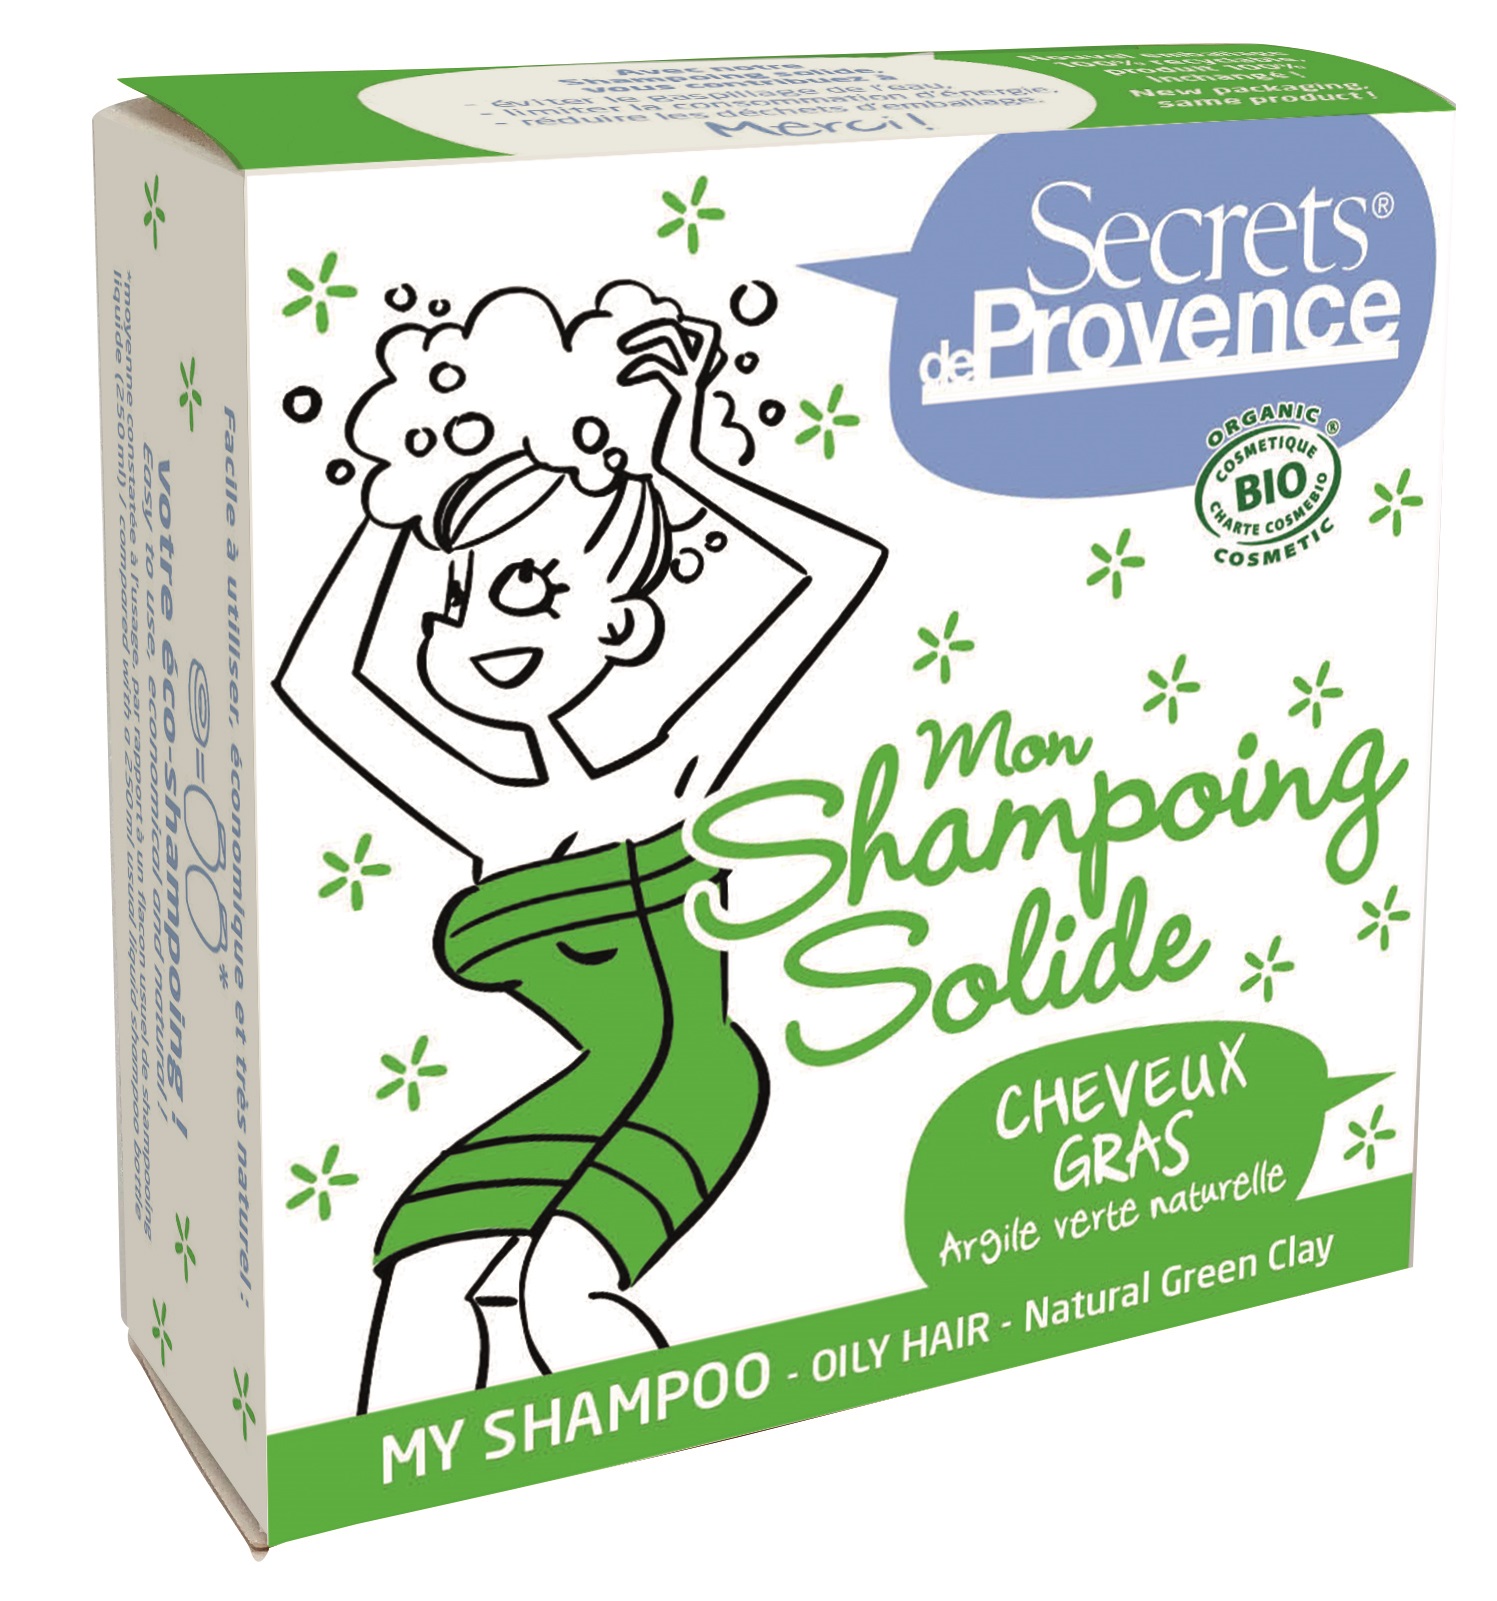 Shampoing solide cheveux gras Secrets de provence